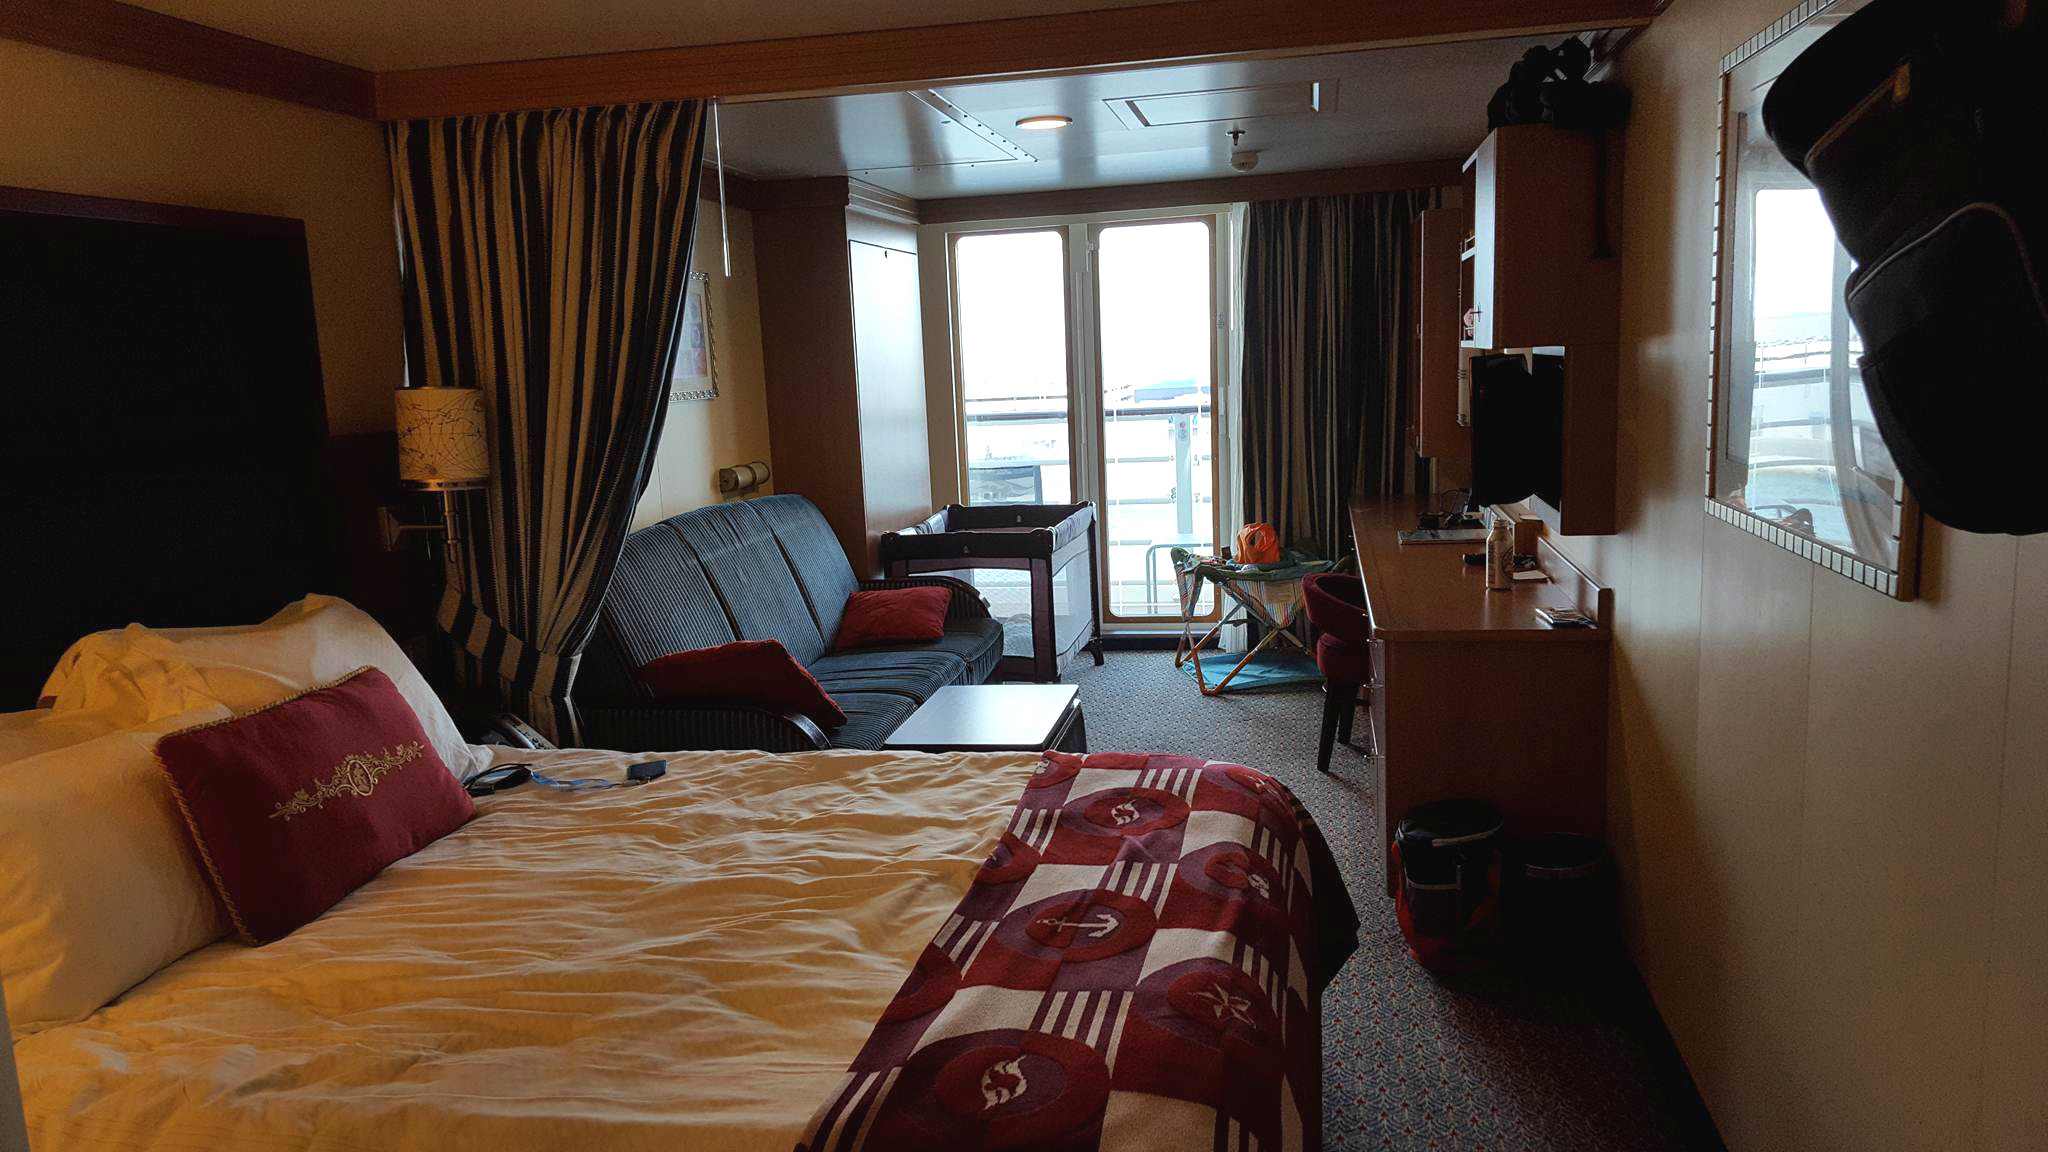 Disney Dream Room 7128 Cruise, Disney Cruise Bunk Beds